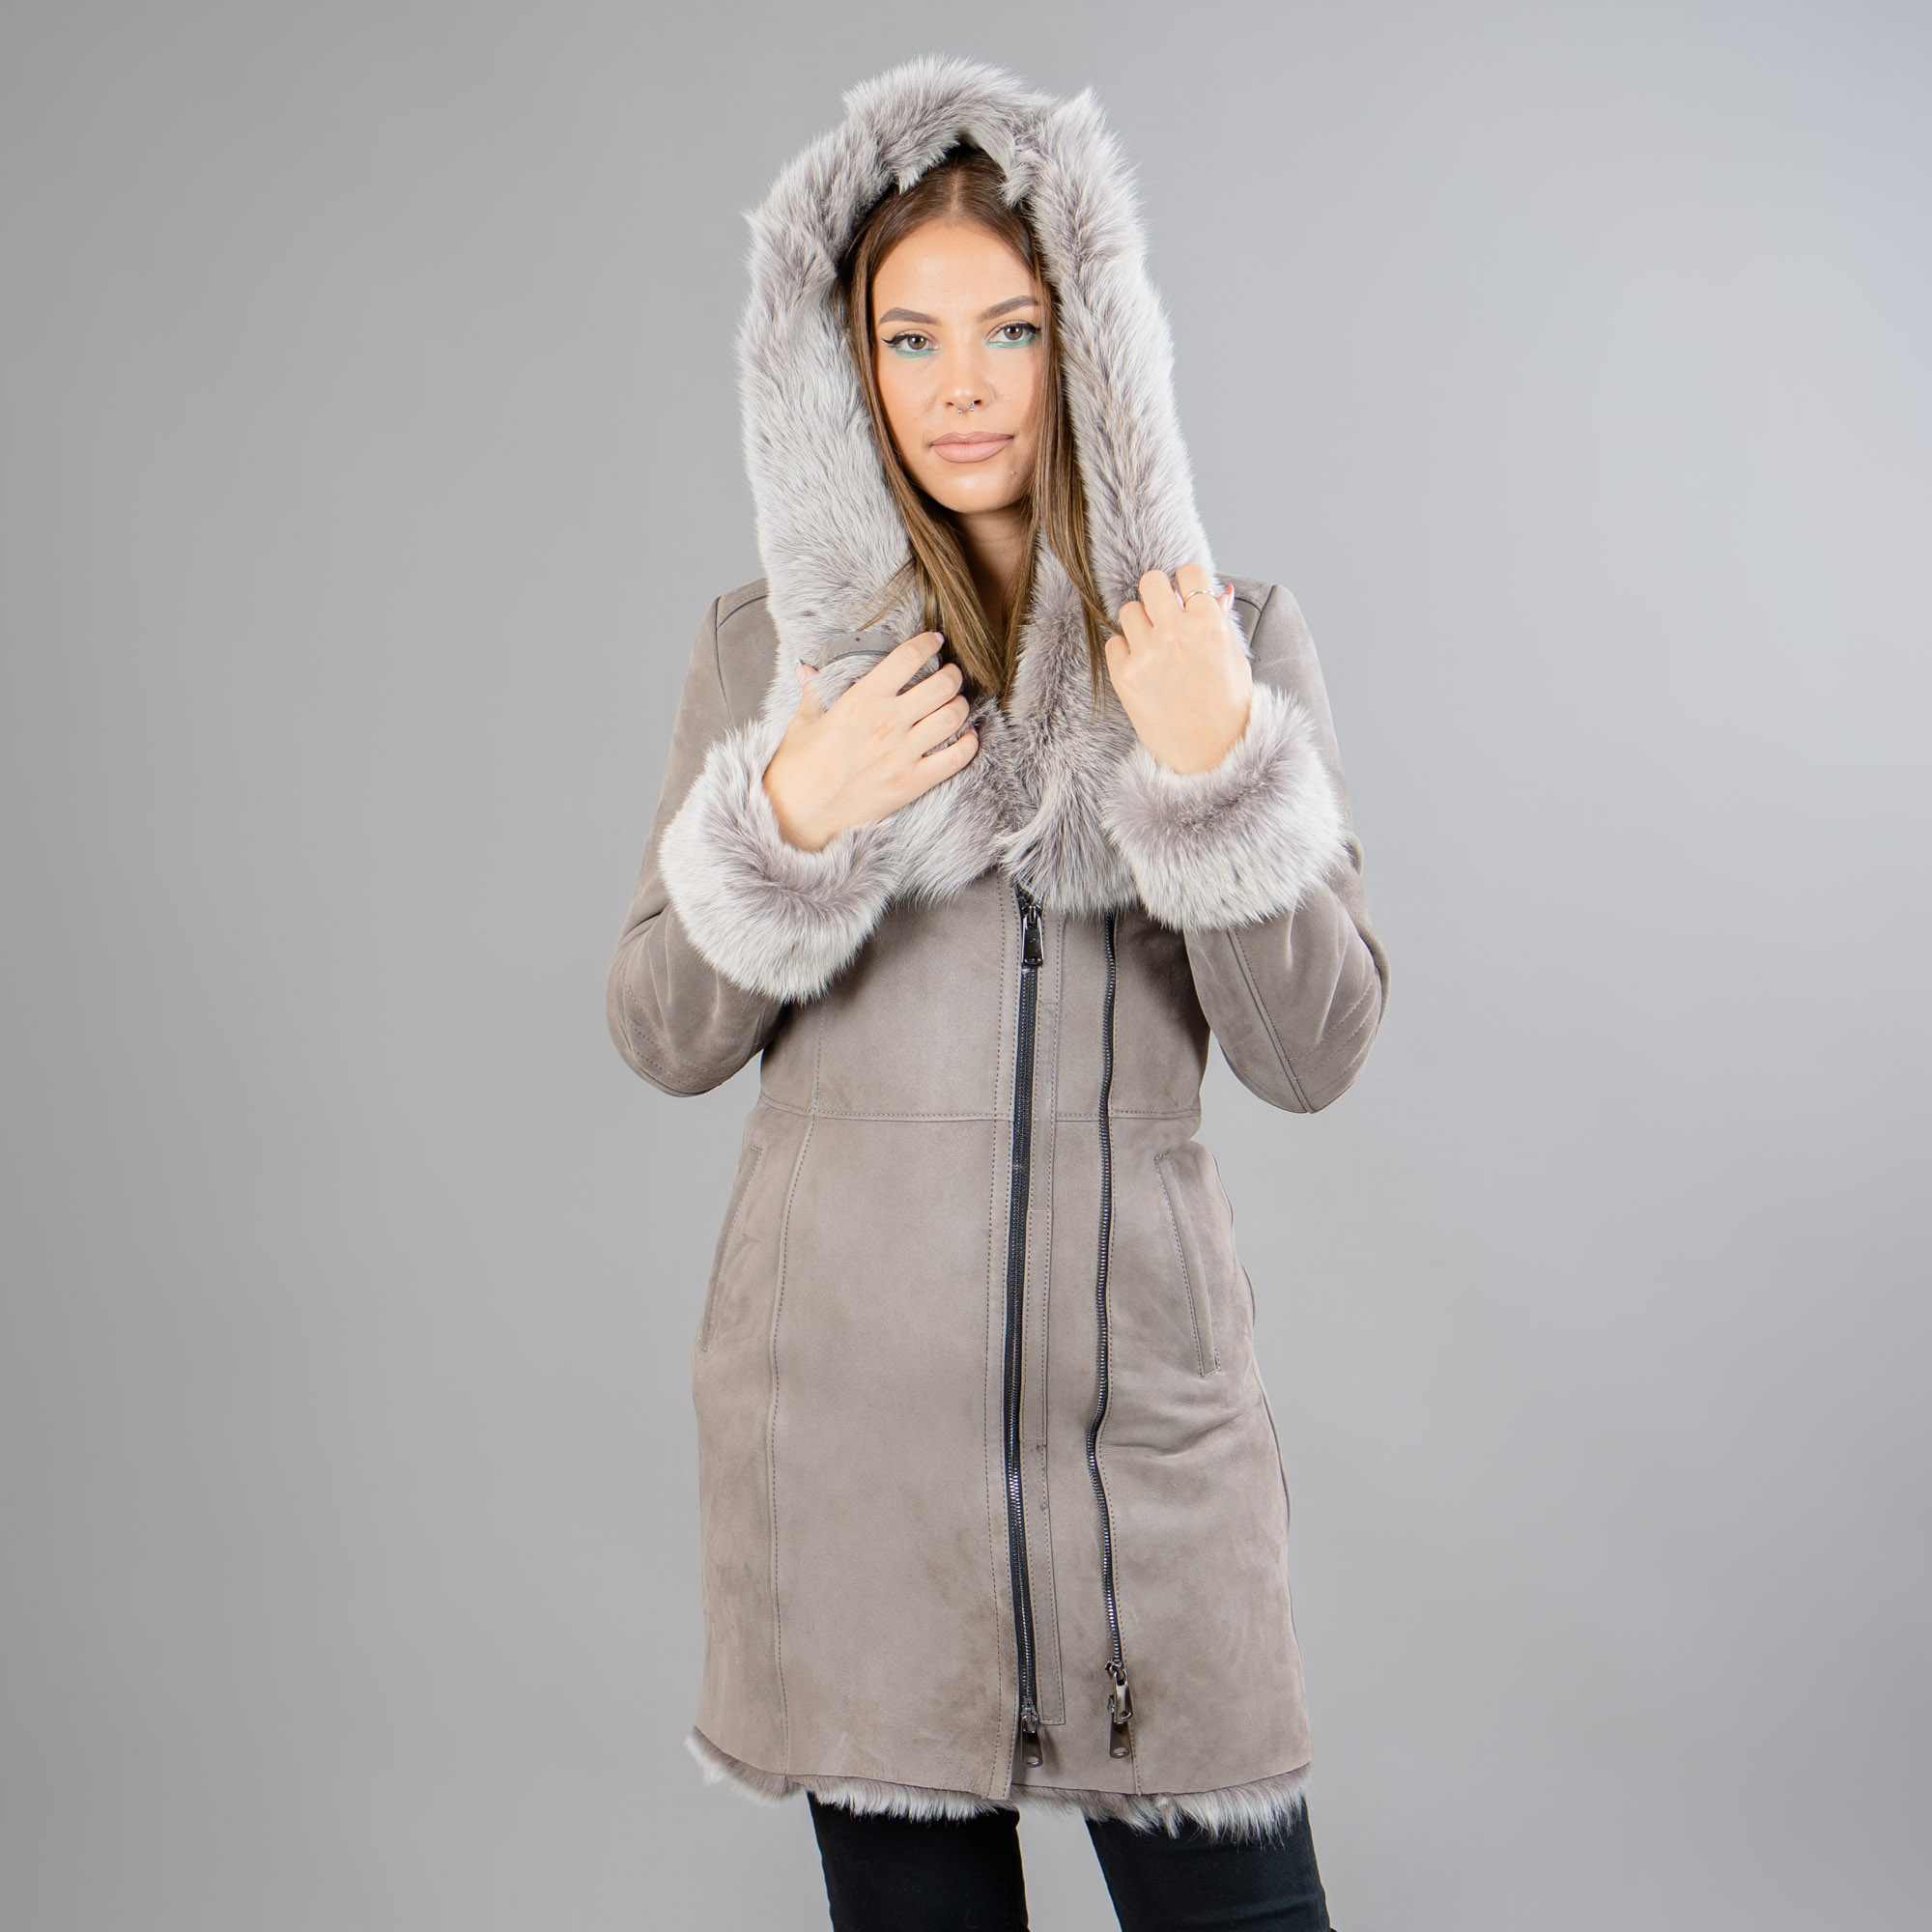 Gray sheepskin coat with a hood.